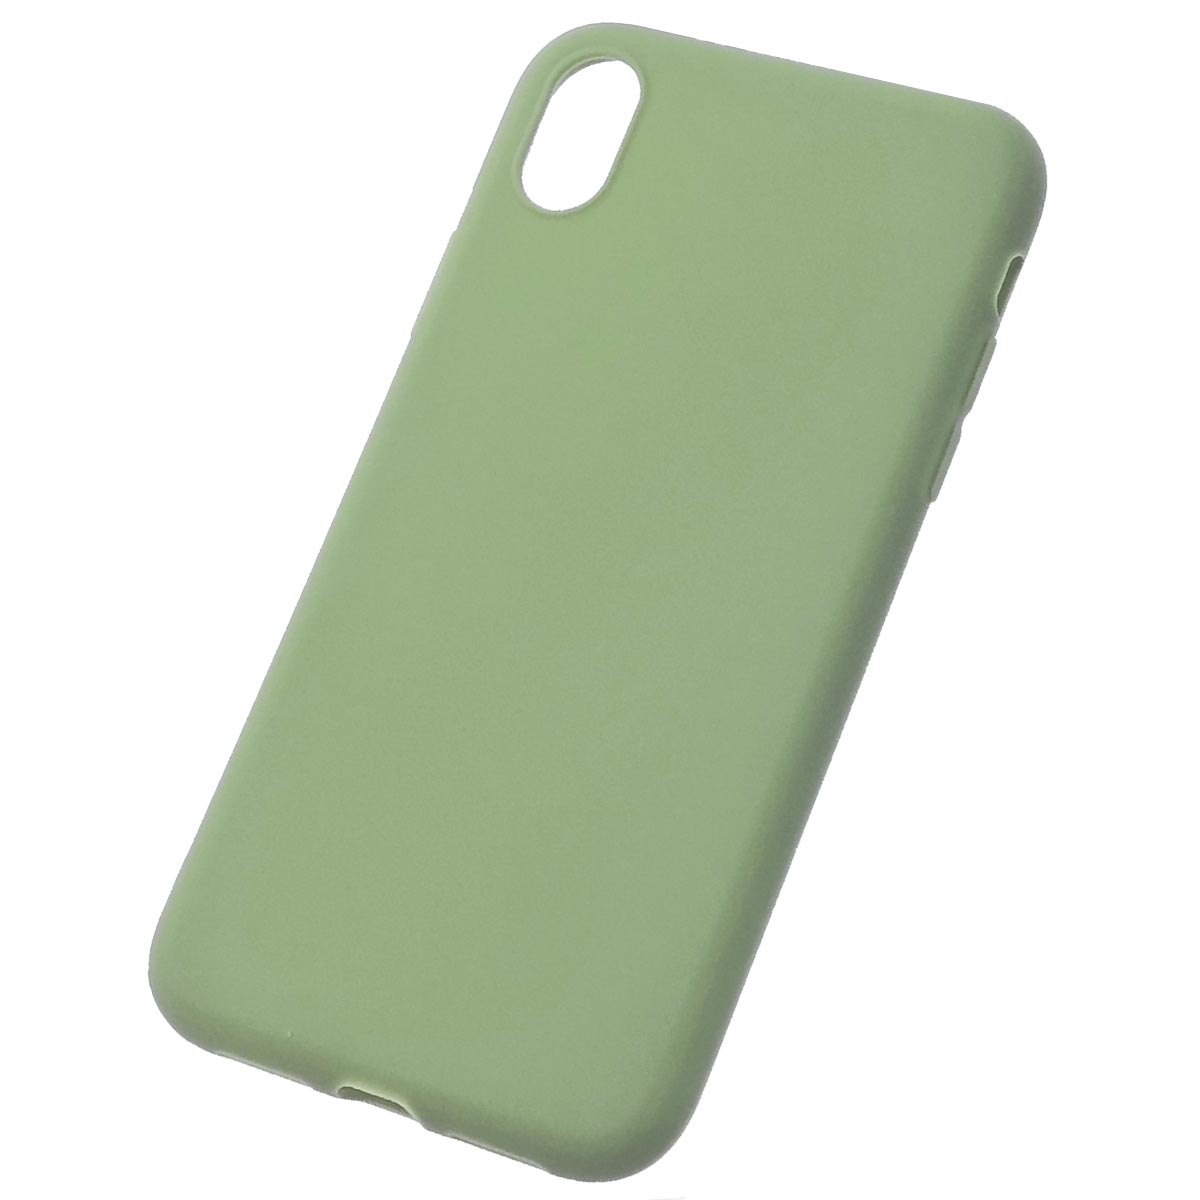 Чехол накладка SOFT TOUCH для APPLE iPhone XR, силикон, матовый, цвет фисташковый